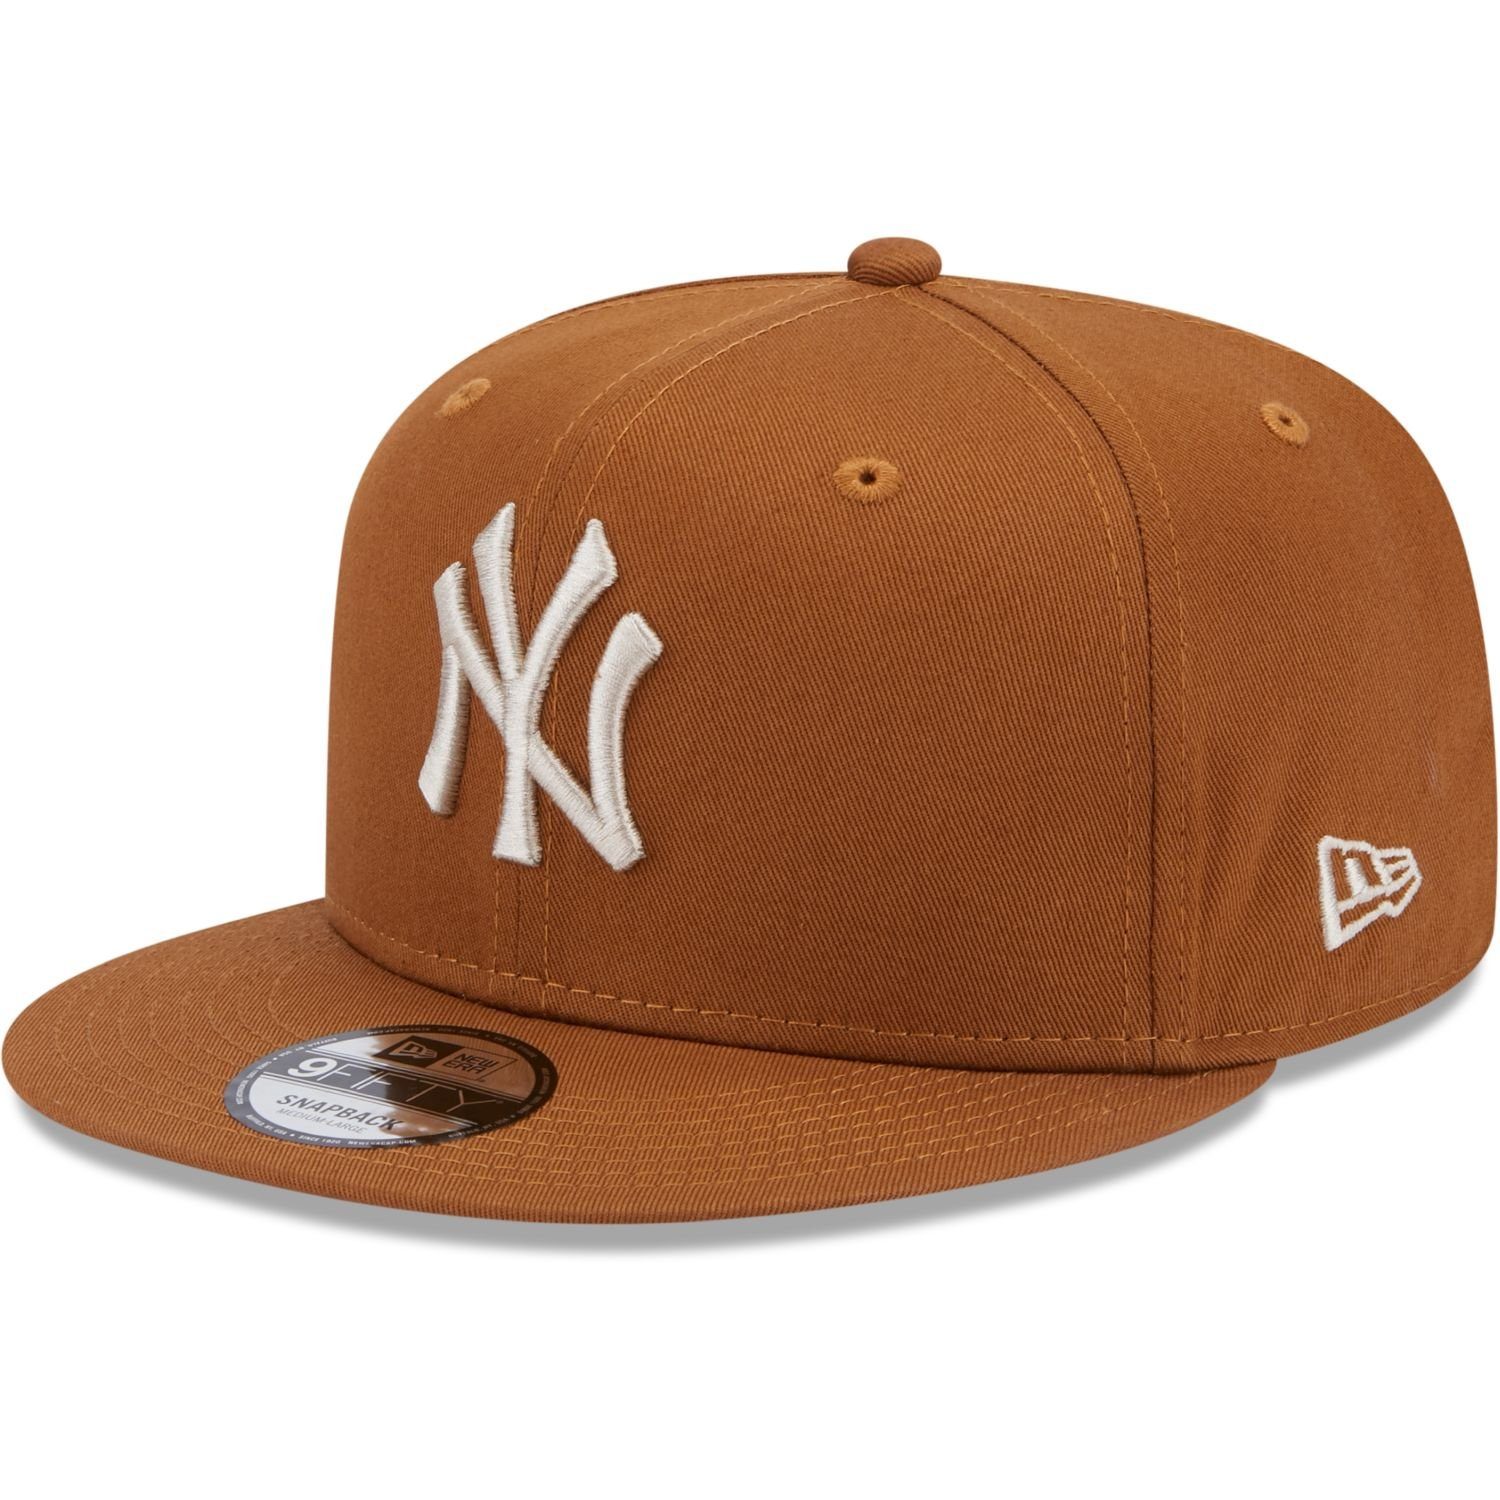 New Era Snapback Cap 9Fifty New York Yankees peanut